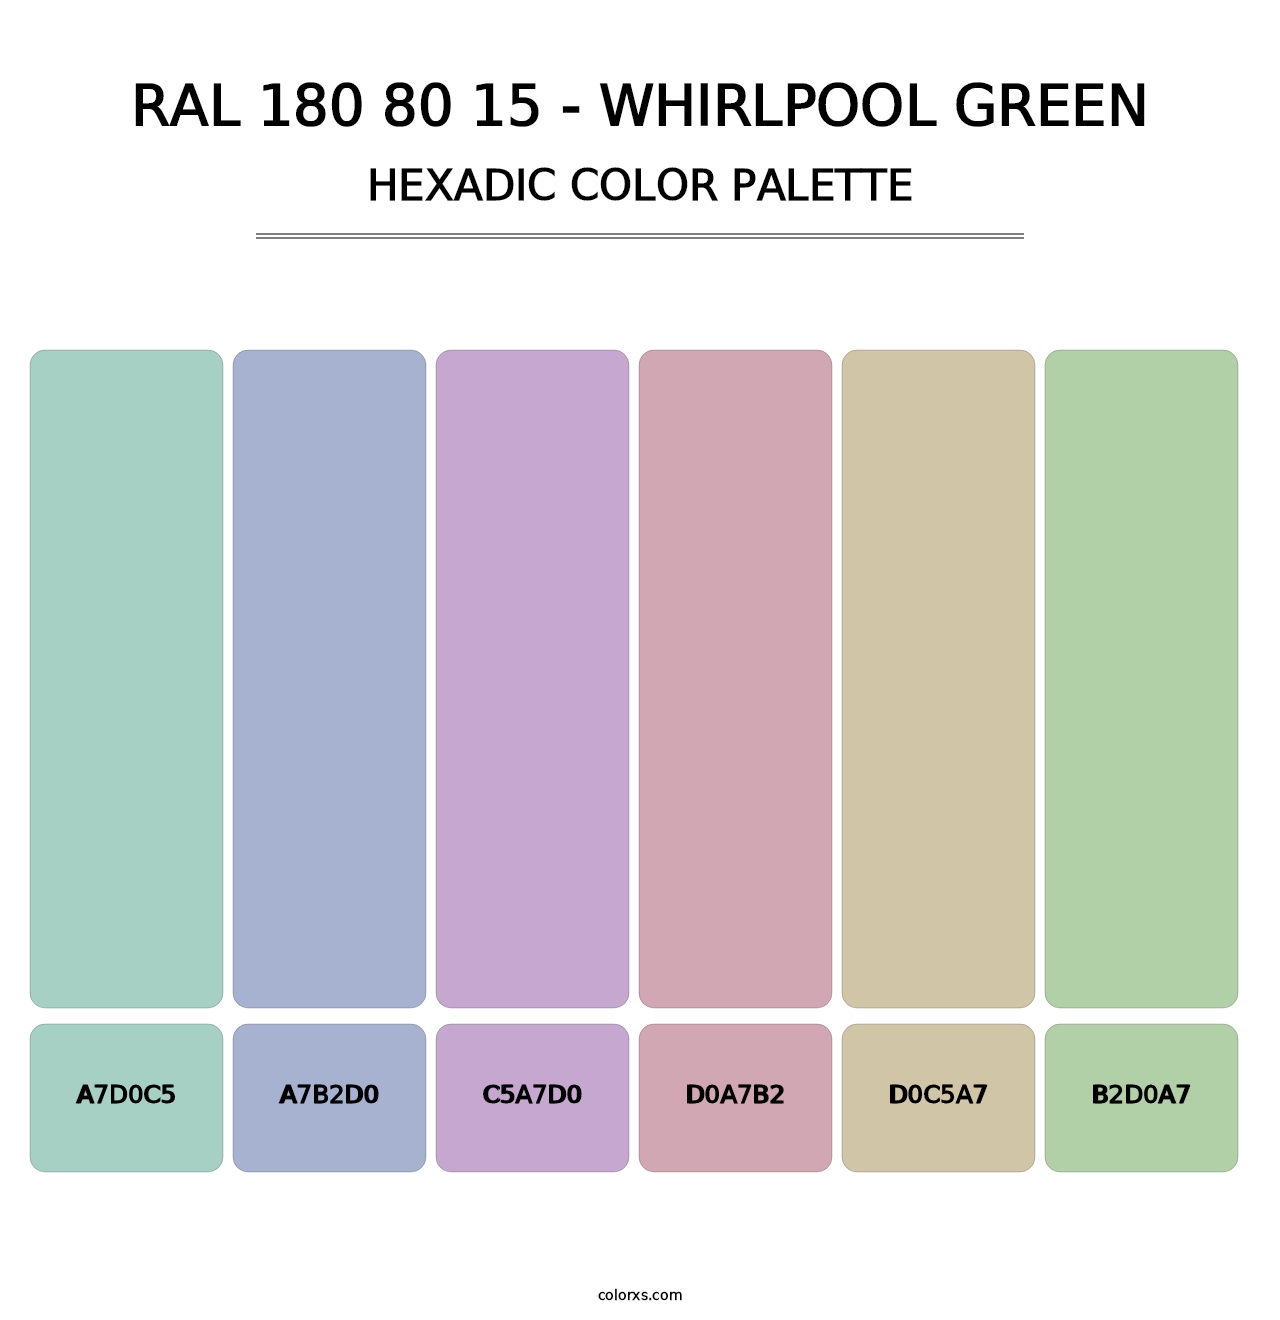 RAL 180 80 15 - Whirlpool Green - Hexadic Color Palette